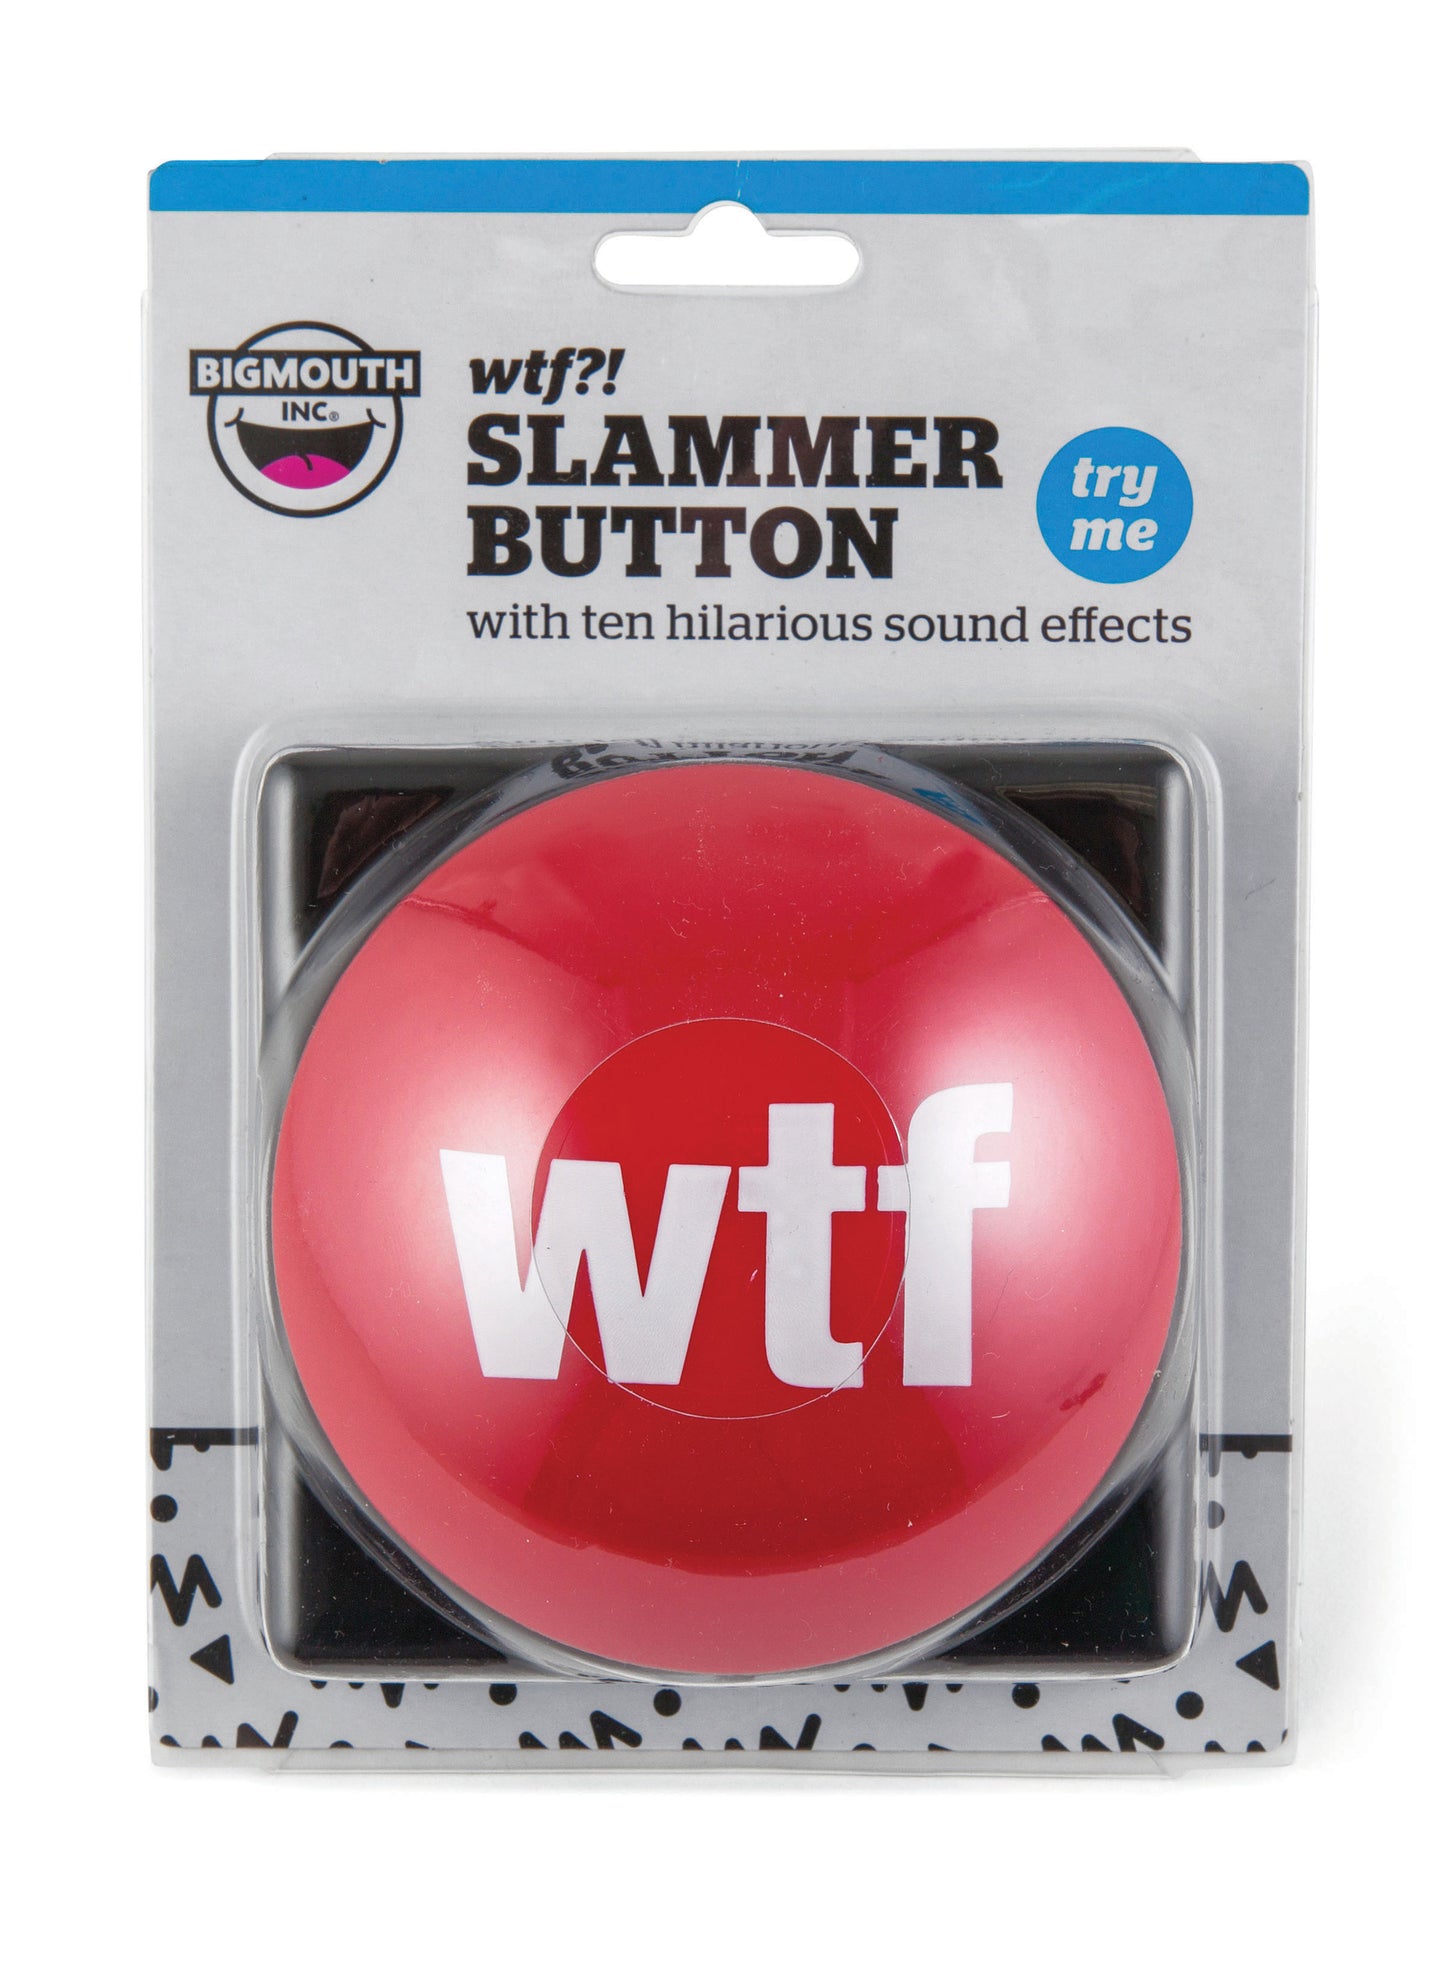 The WTF Slammer Button